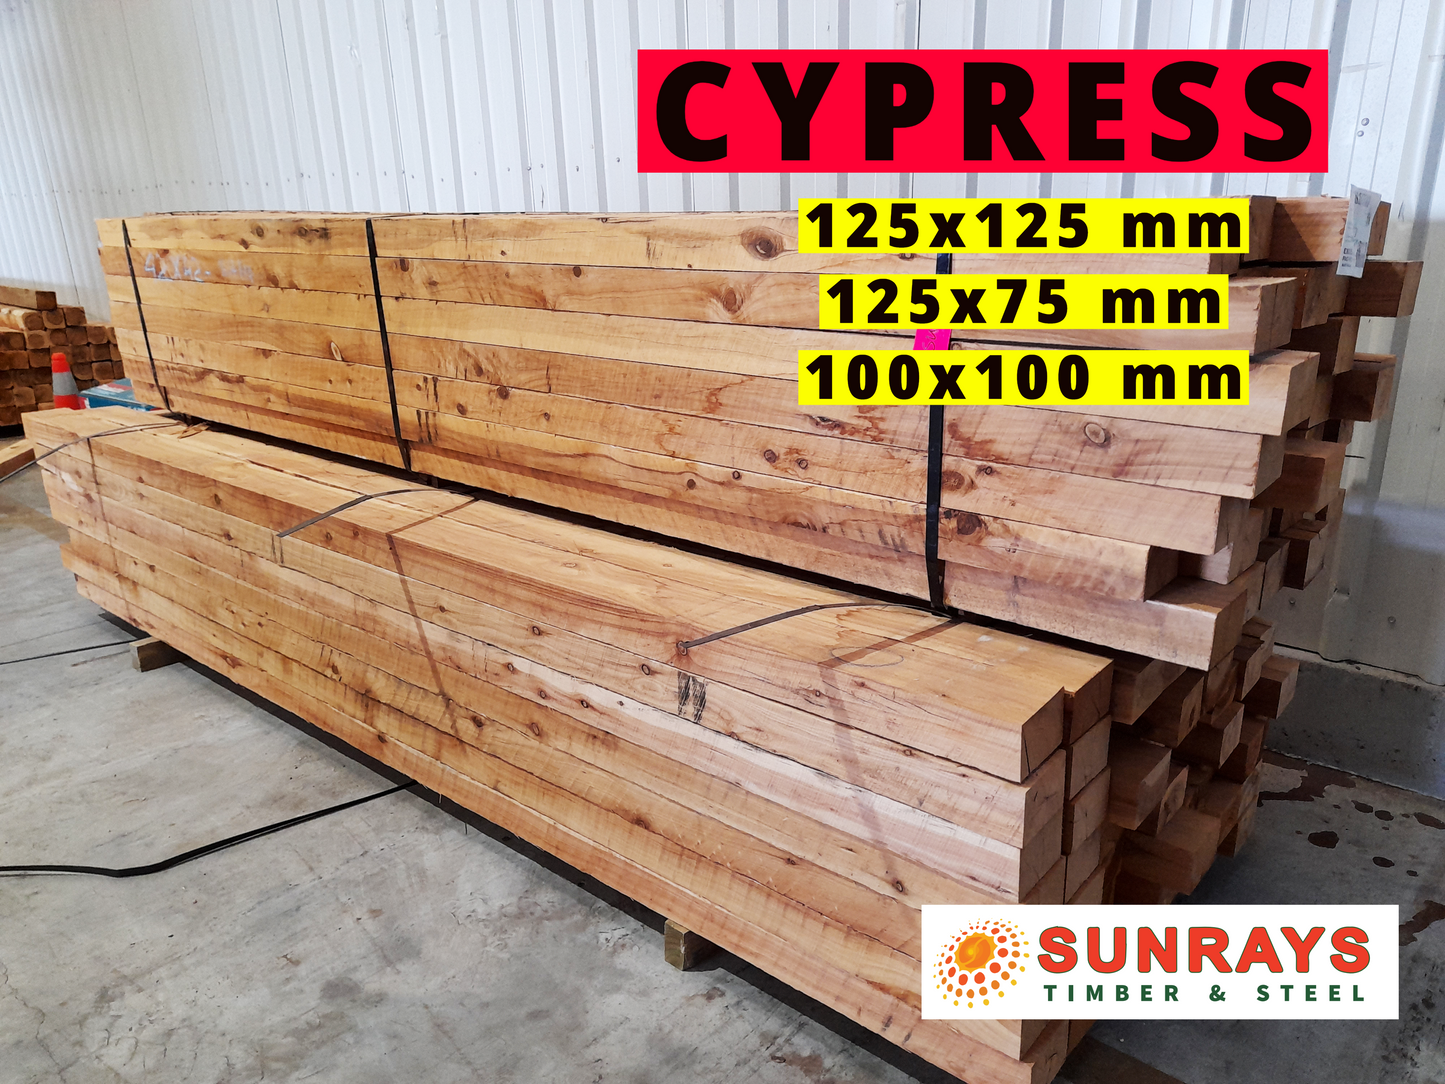 Cypress post